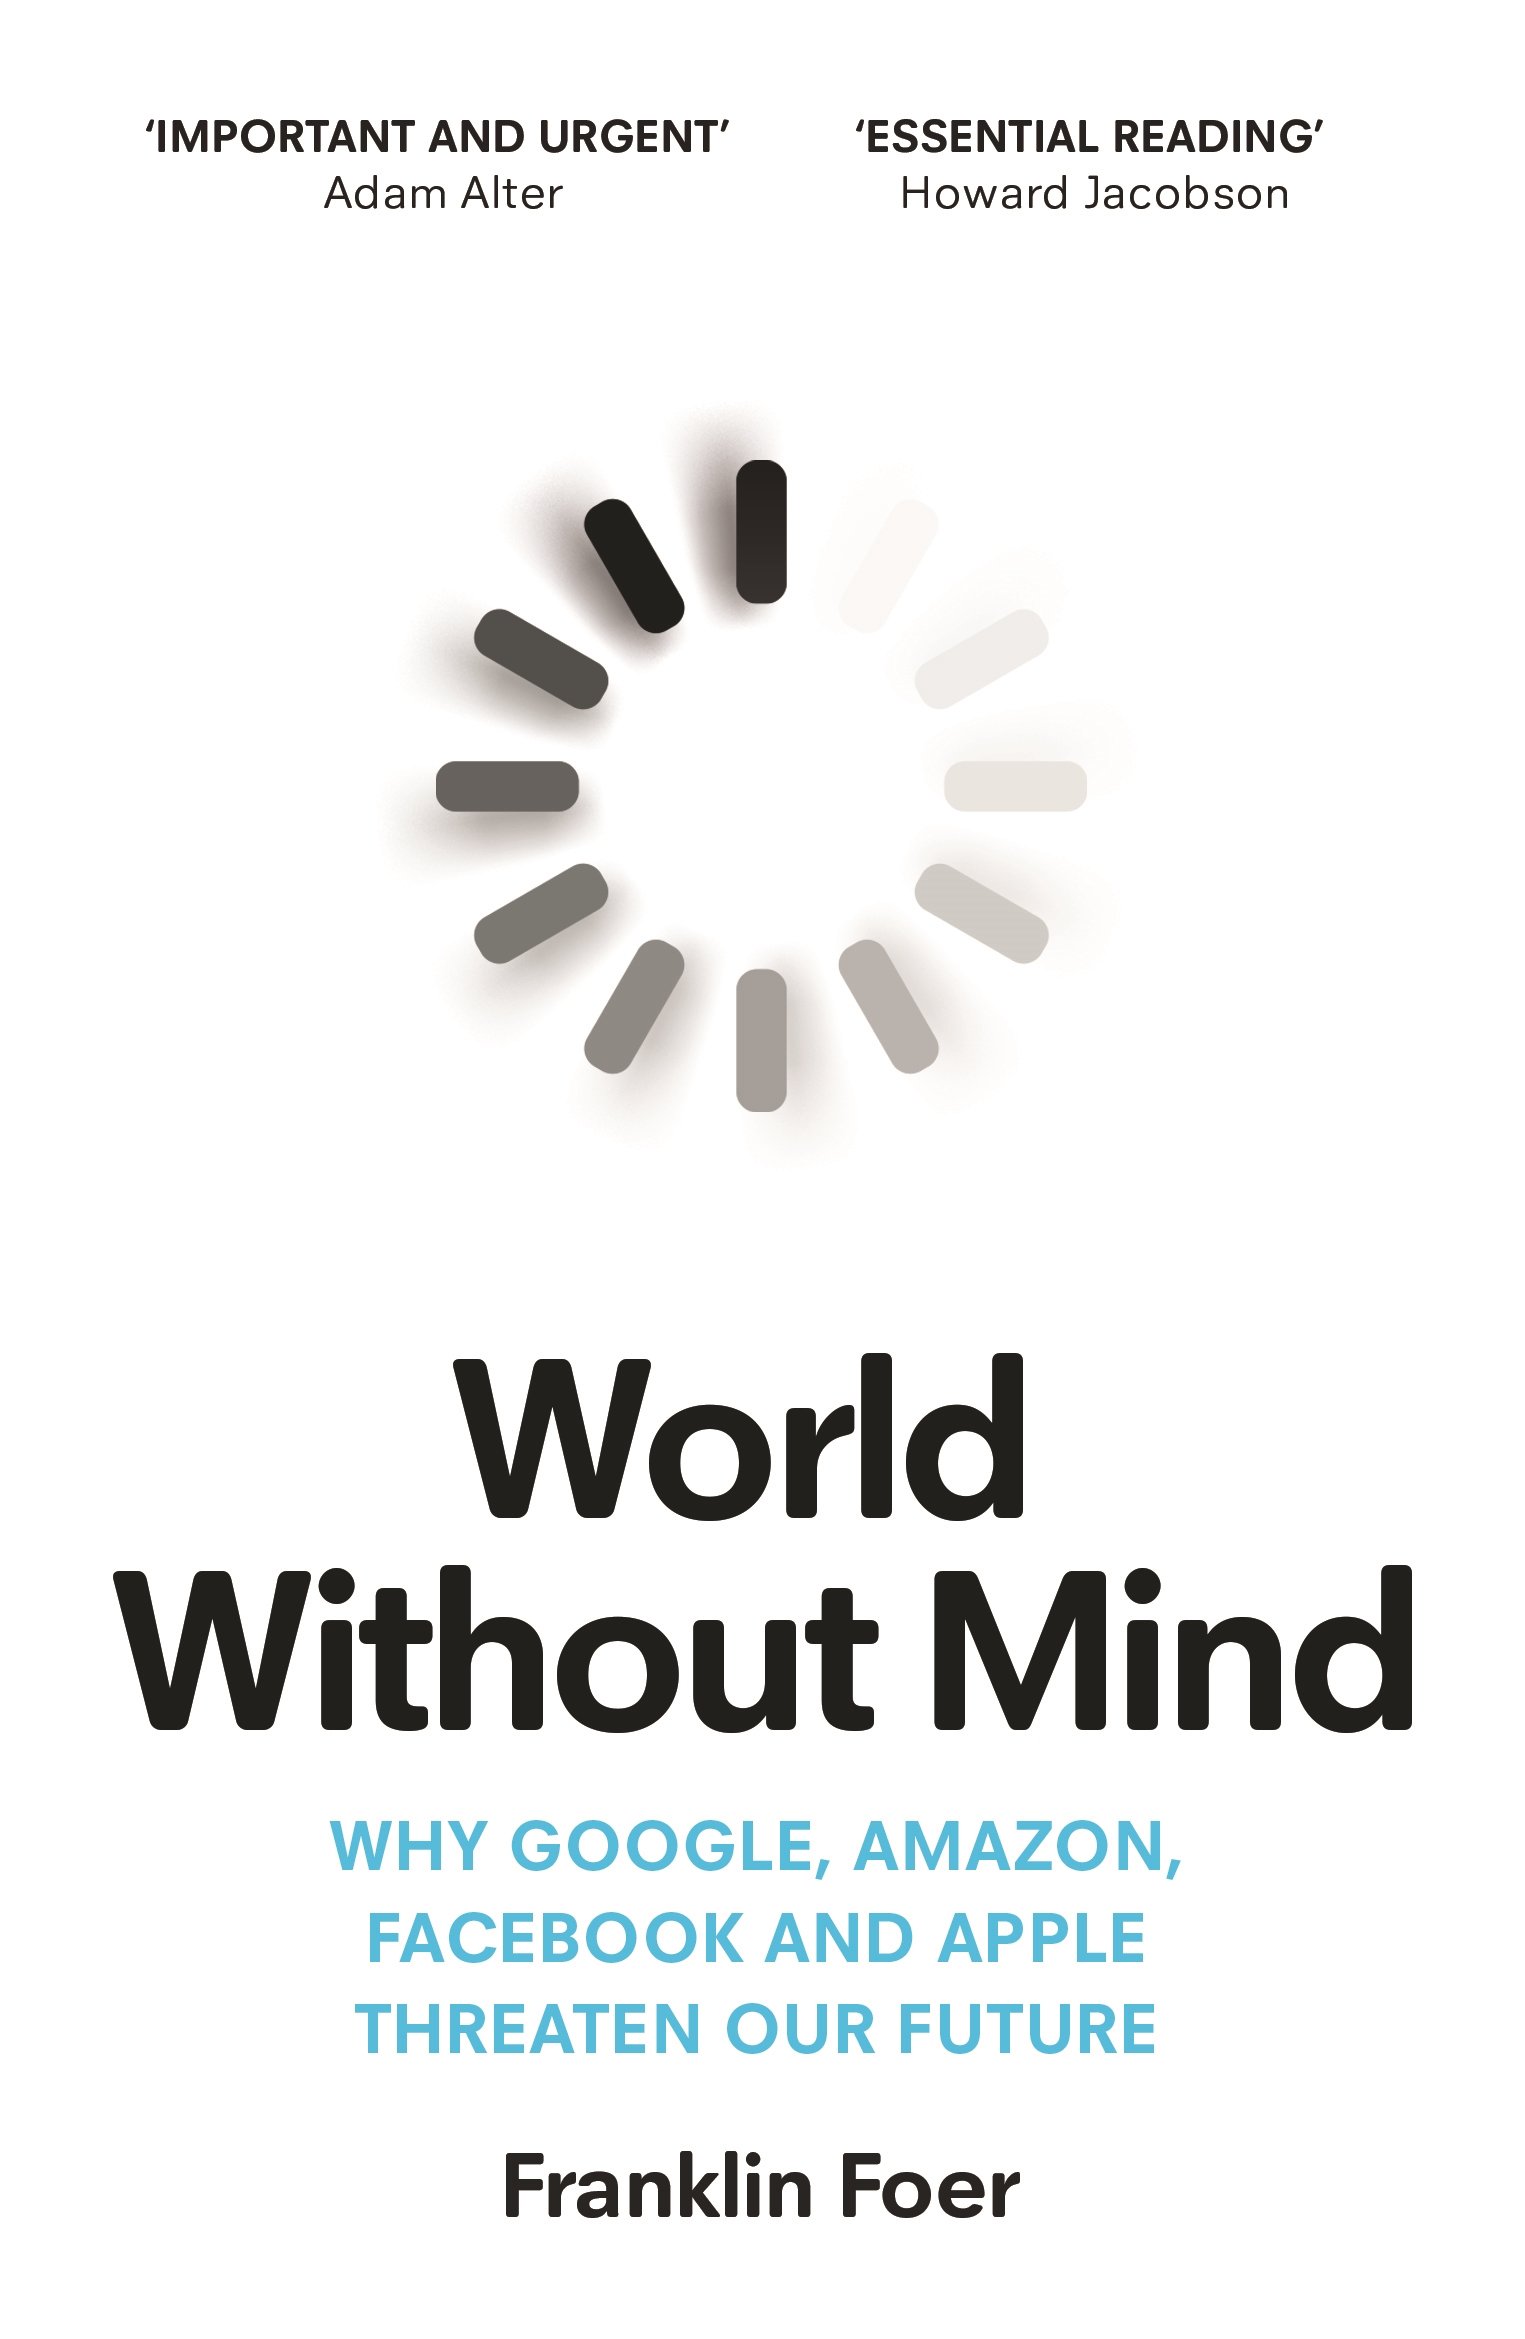 World Without Mind | Franklin Foer image0